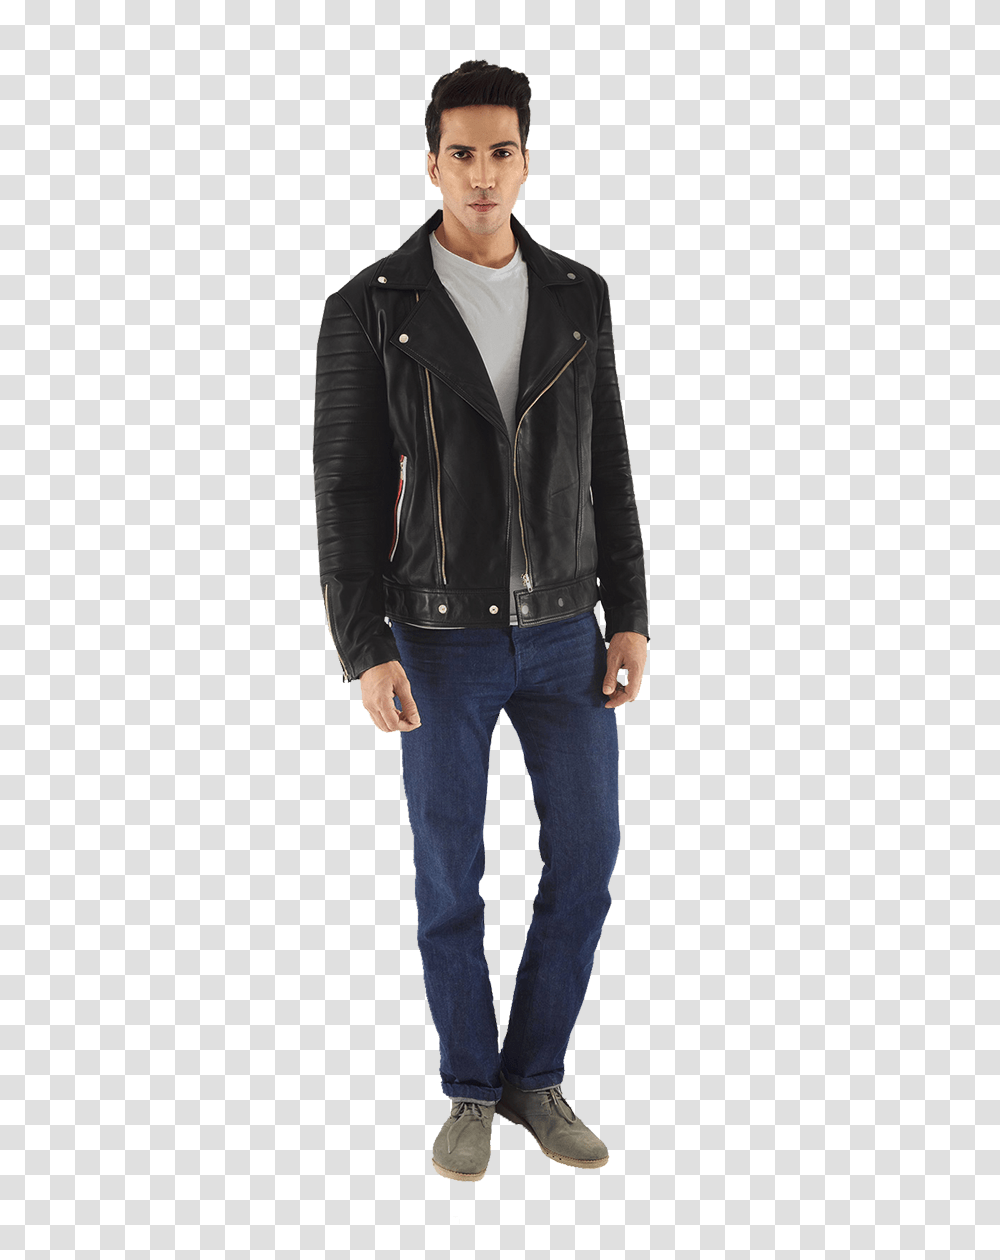 Leather Jacket, Apparel, Coat, Person Transparent Png